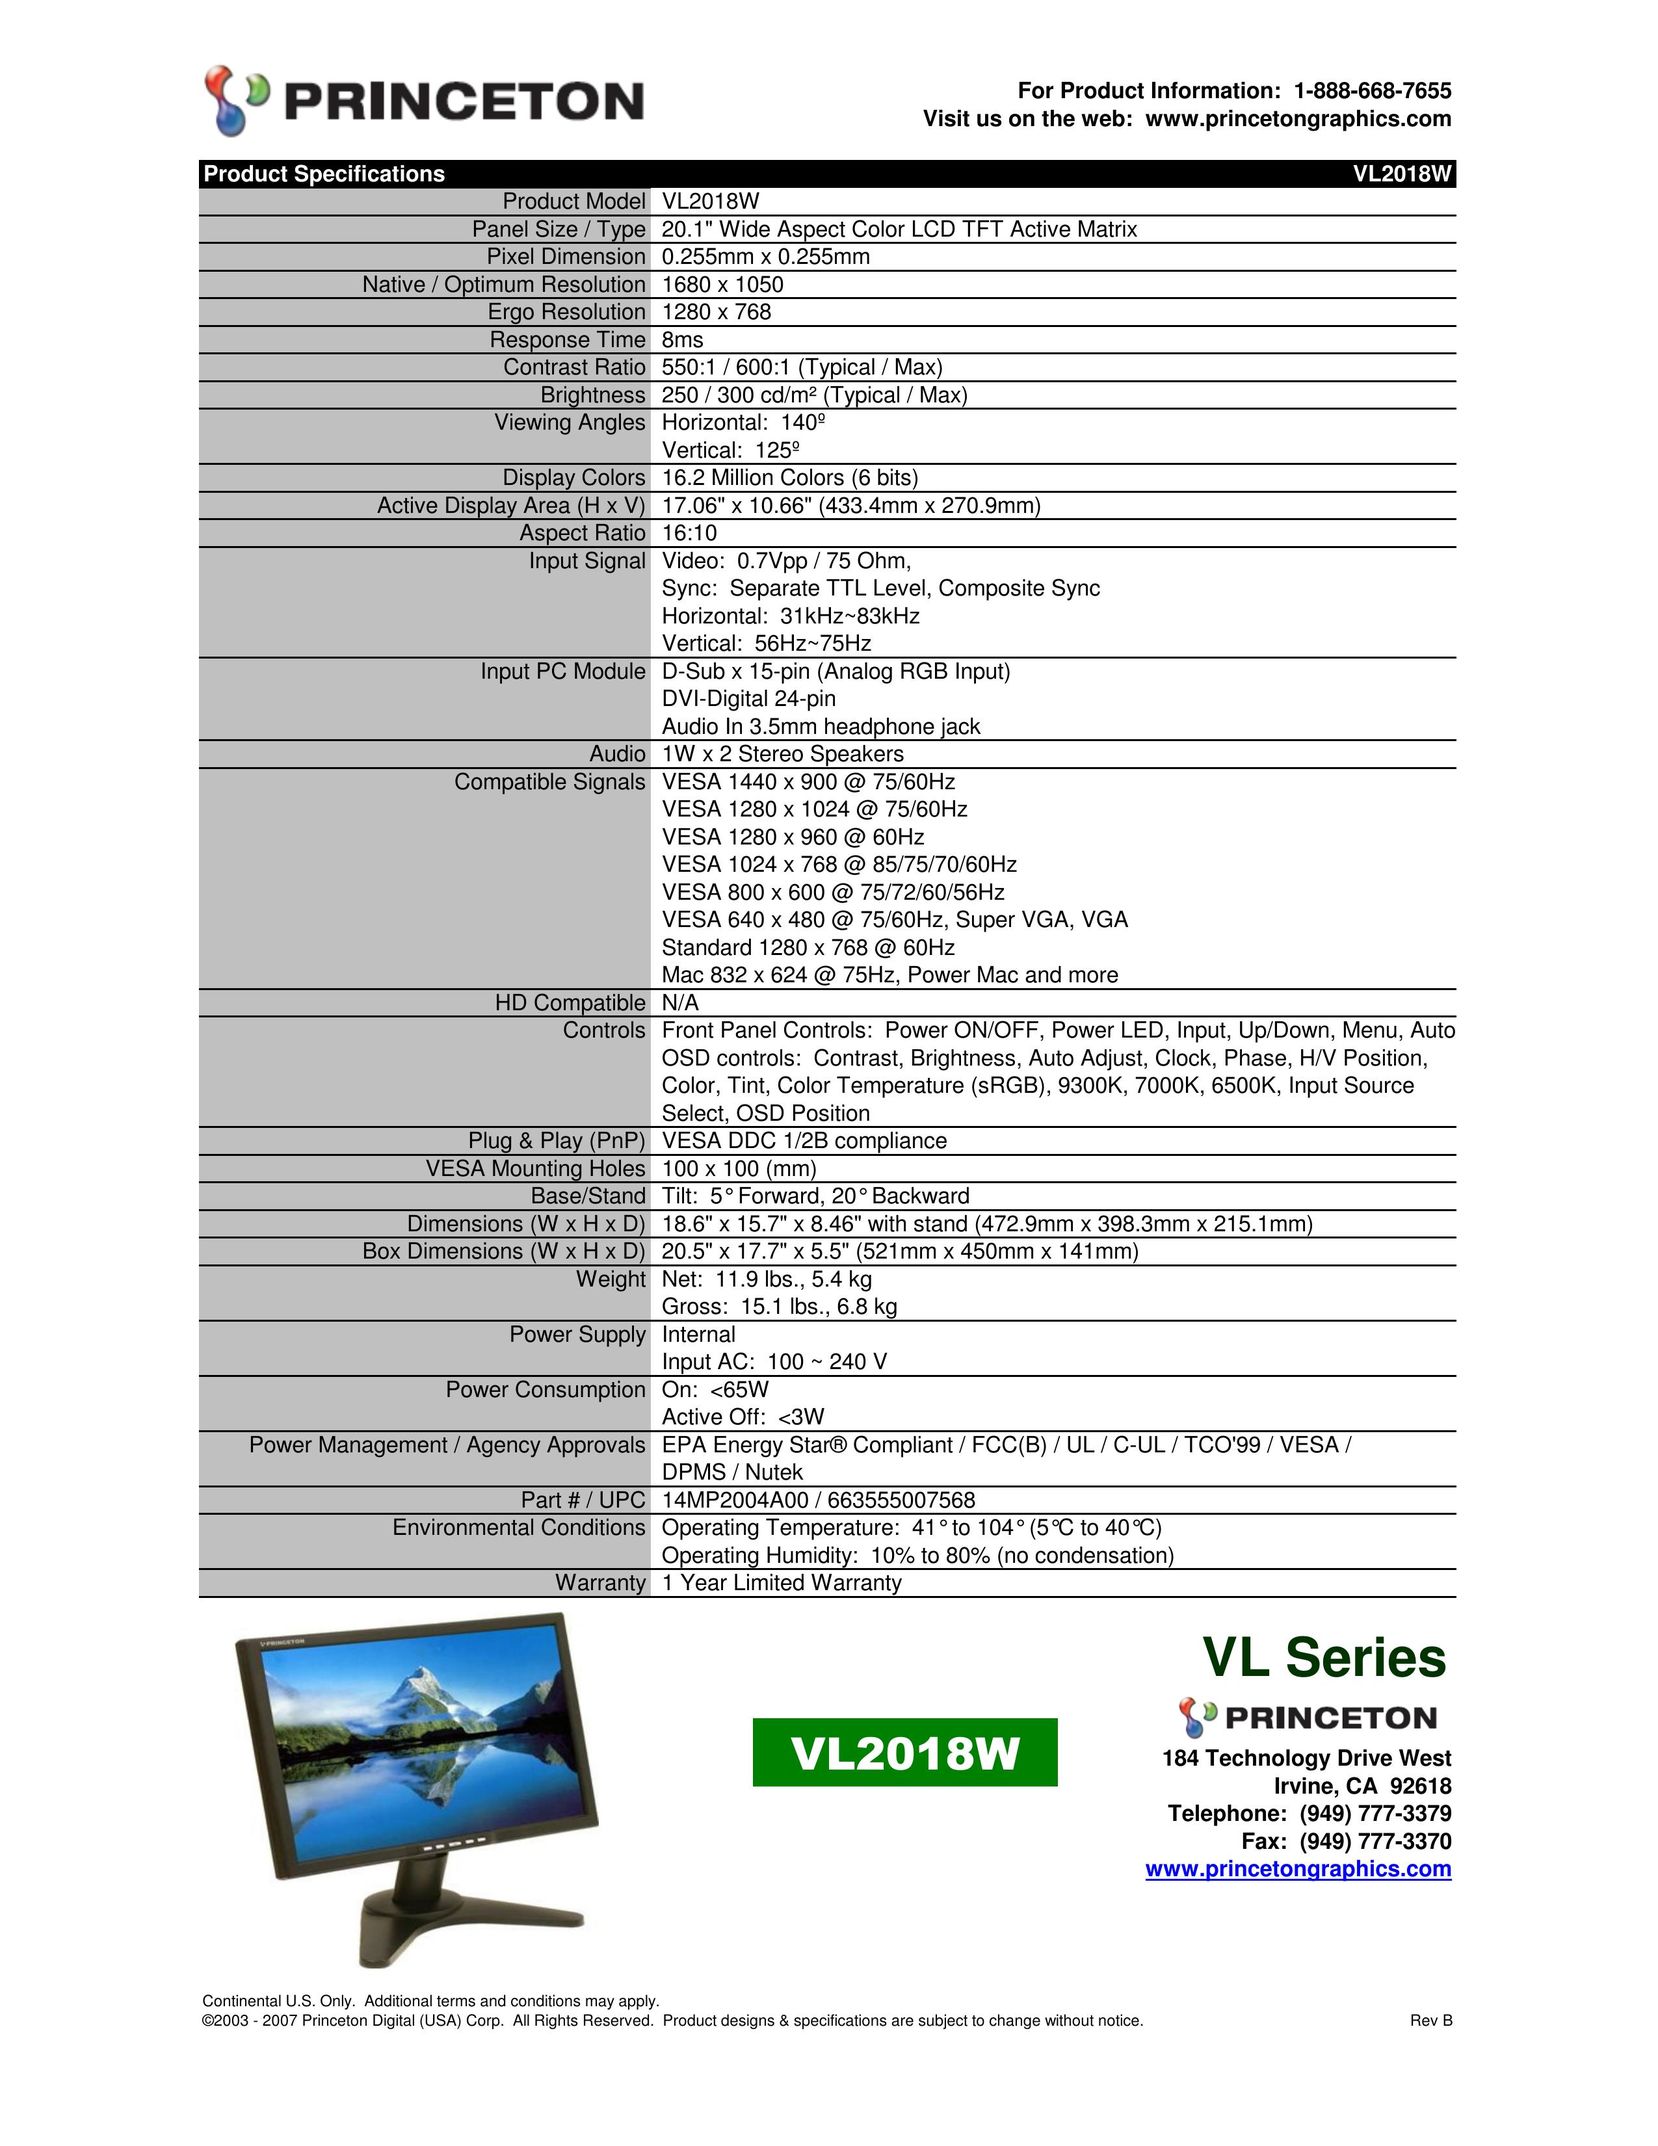 Princeton VL2018W Computer Monitor User Manual